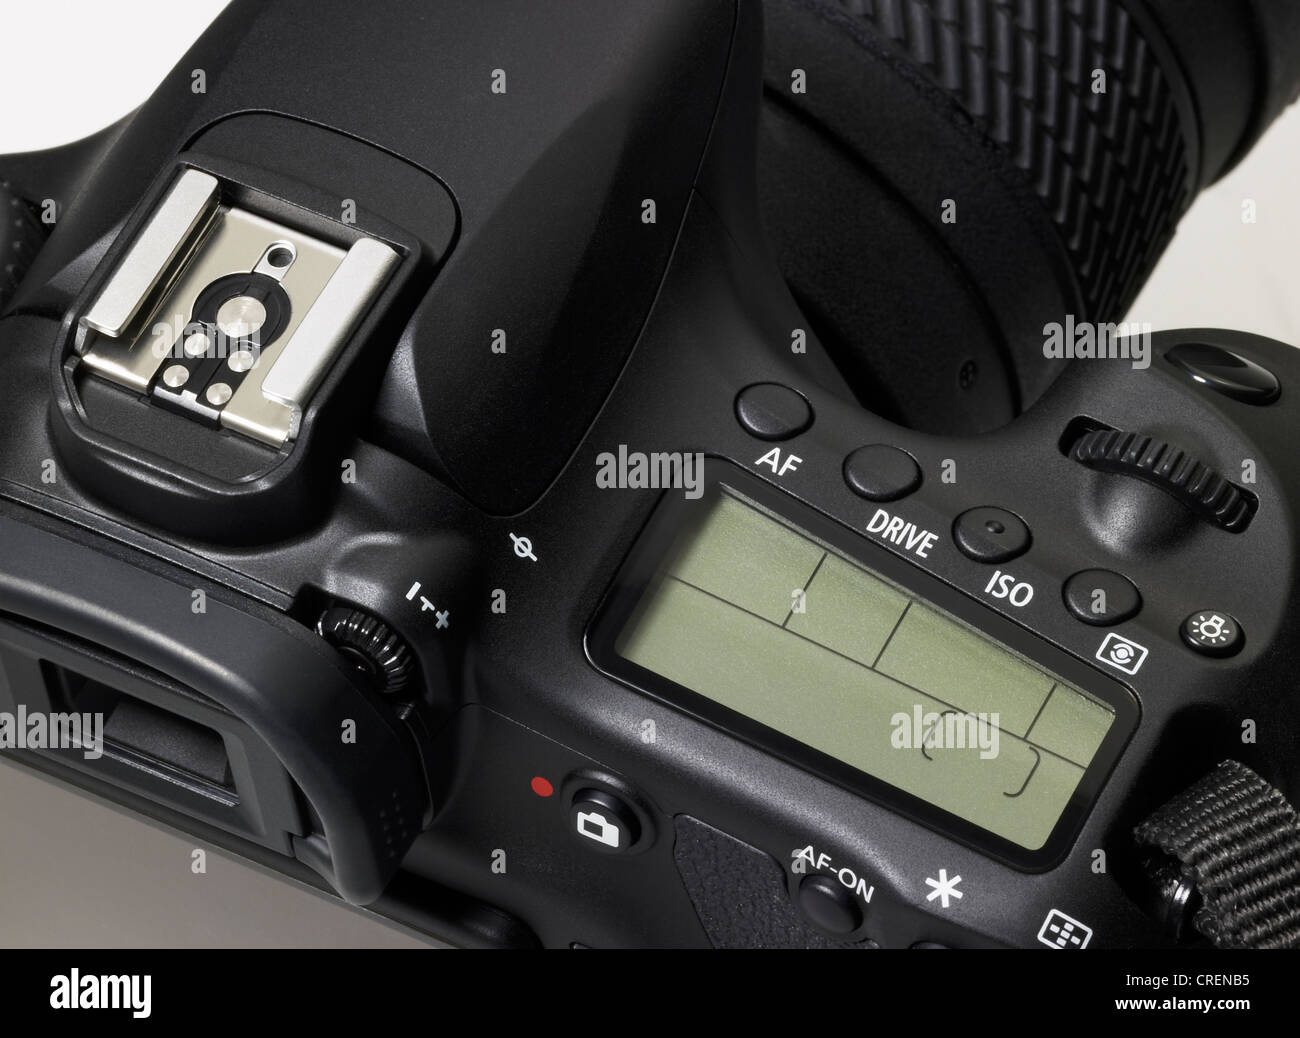 detail of a black digital camera Stock Photo